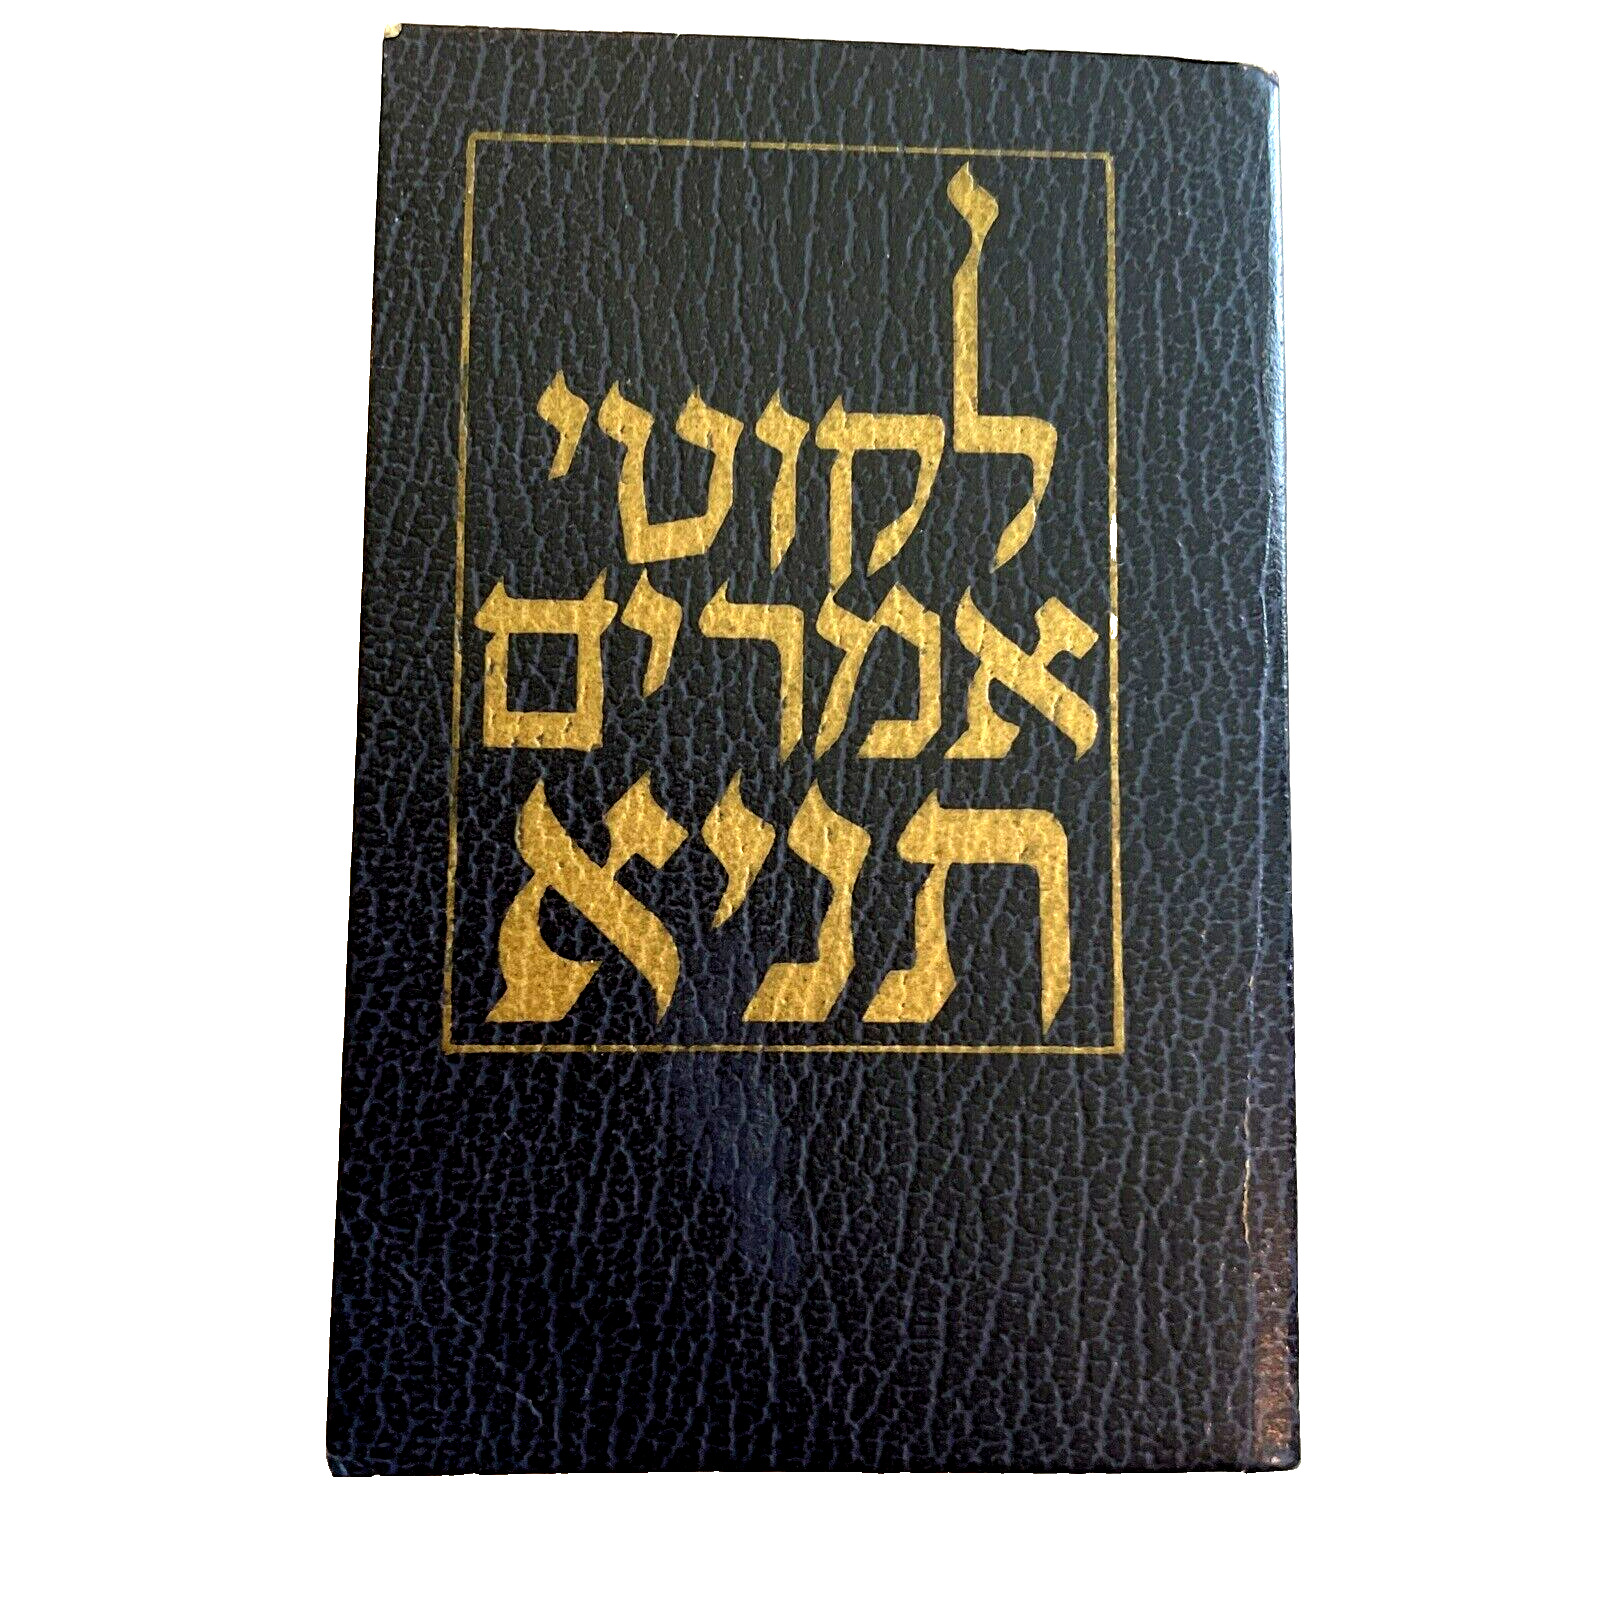 LIKKUTEI AMARIM TANYA BY RABBI SCHNEUR ZALMAN OF LIADI 1984 TINY HEBREW PAPERBK